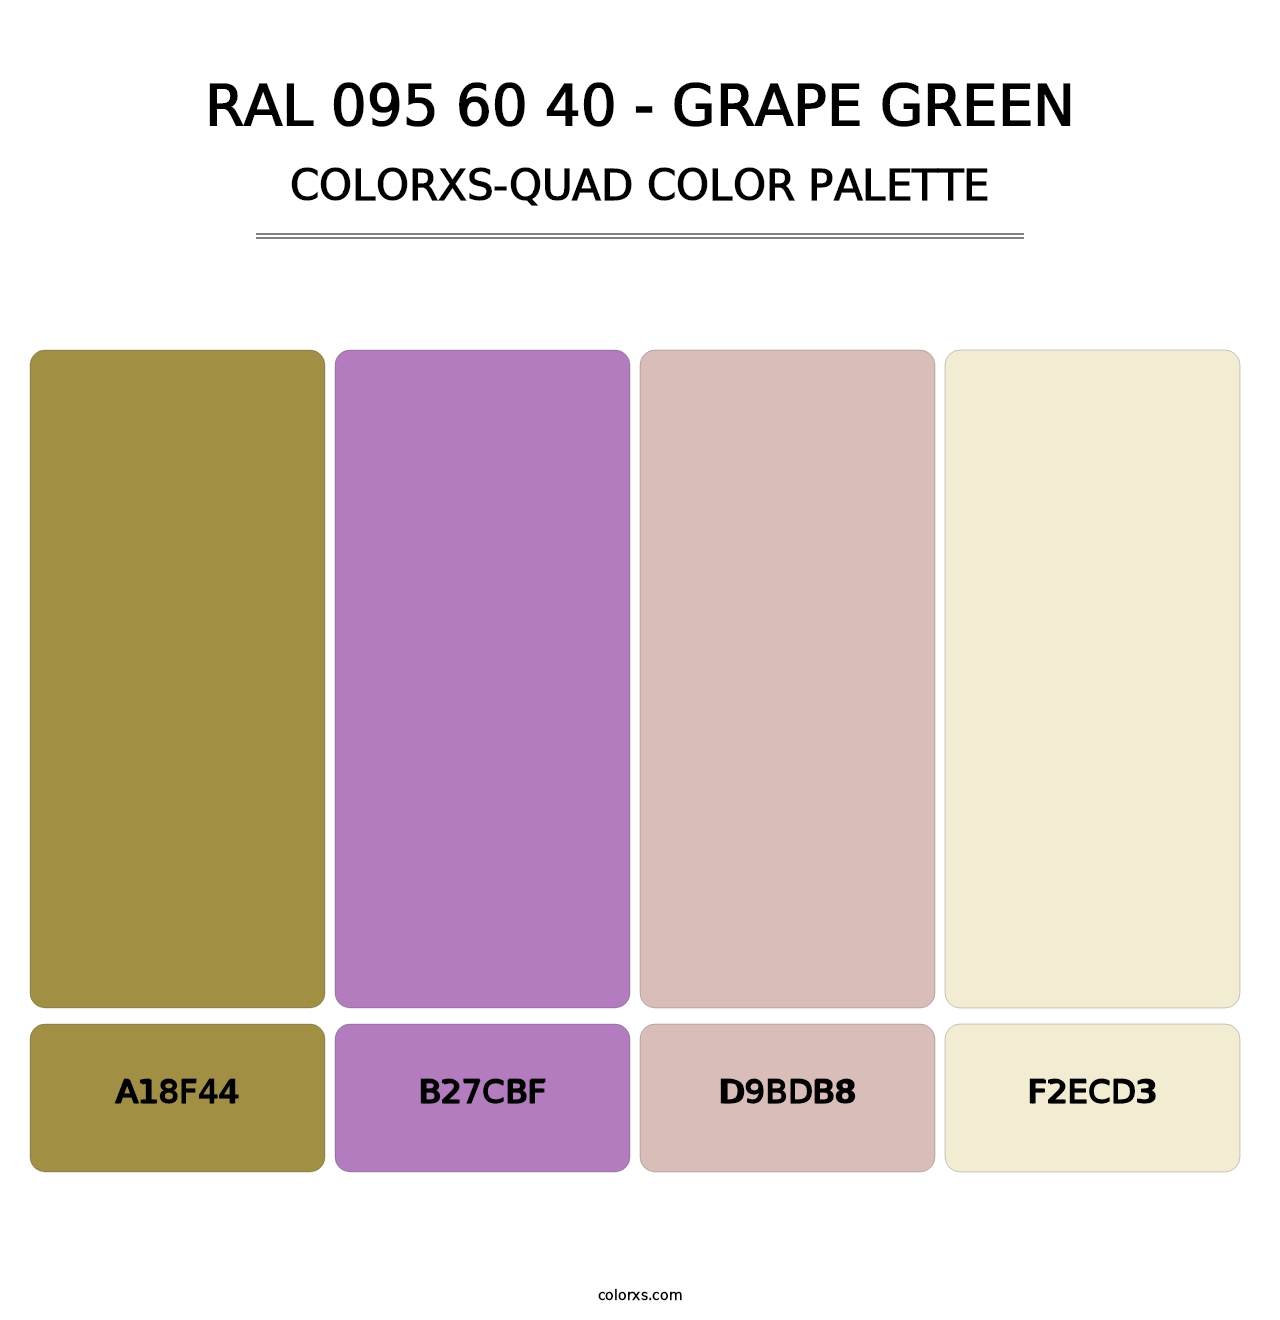 RAL 095 60 40 - Grape Green - Colorxs Quad Palette